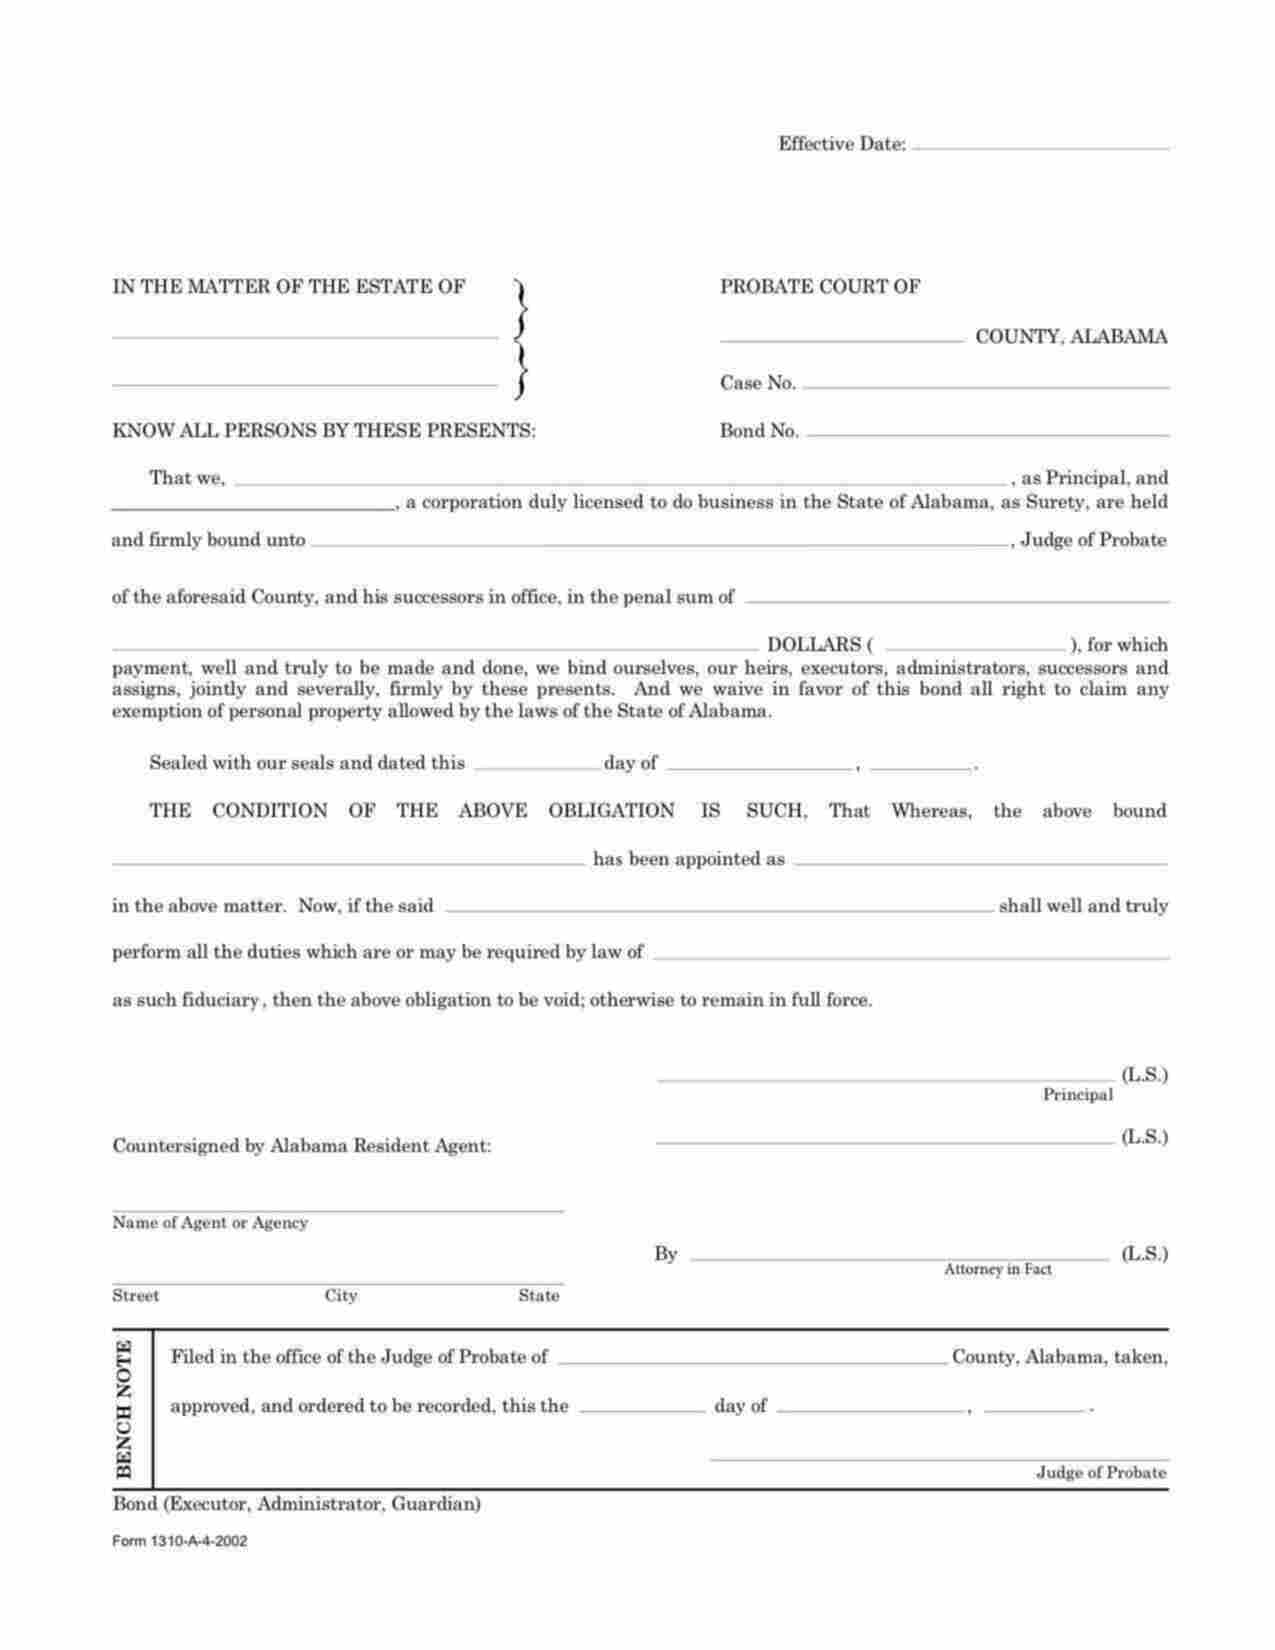 Alabama Conservator/Guardian Bond Form